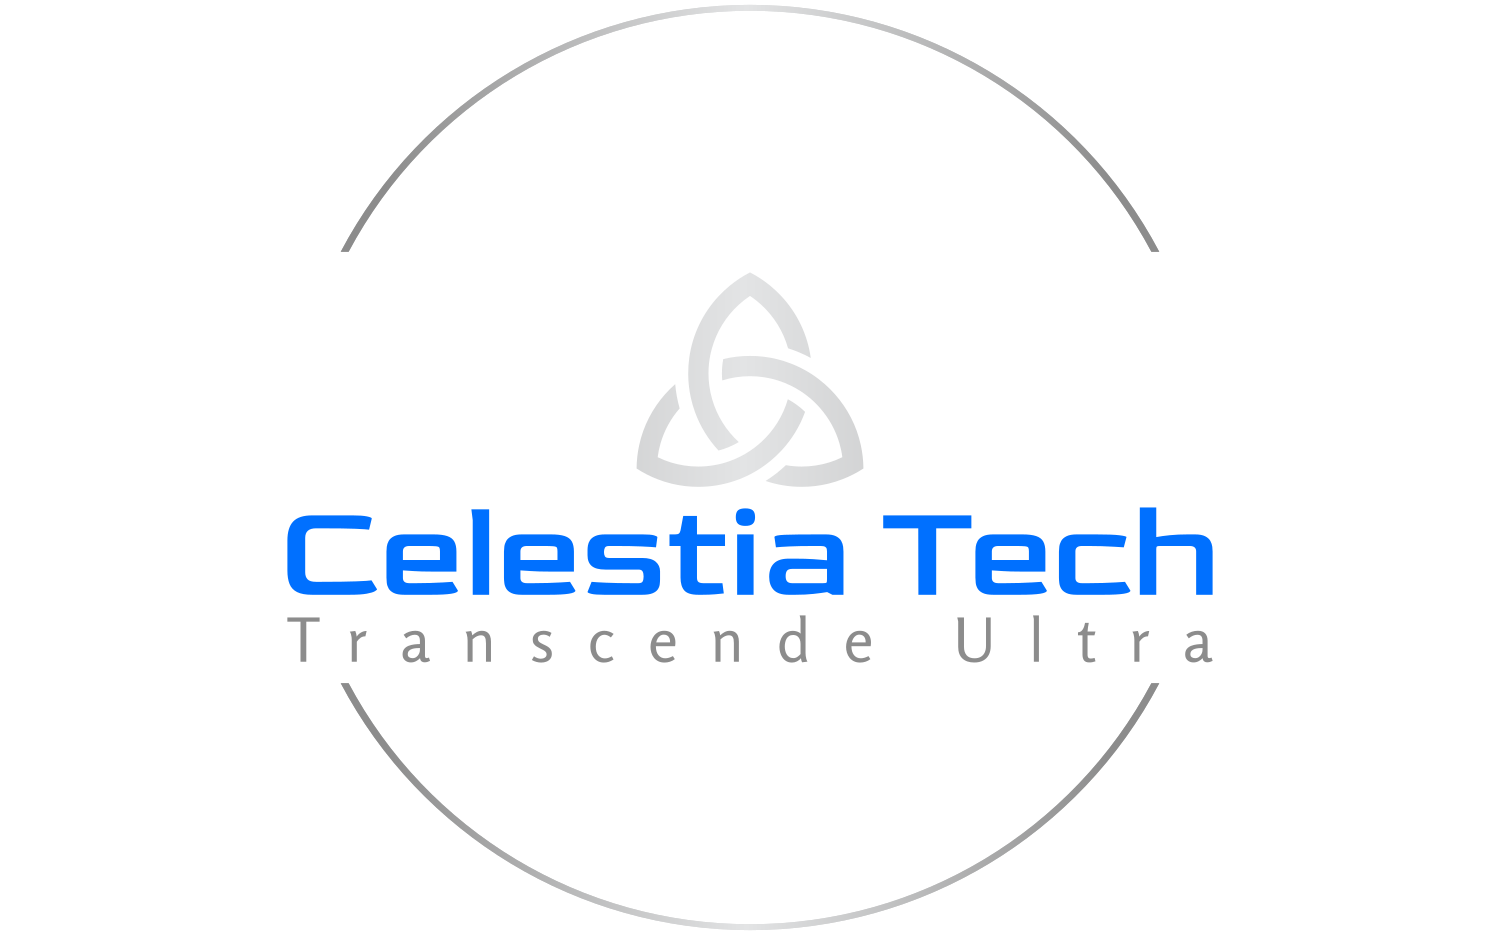 Celestia Tech